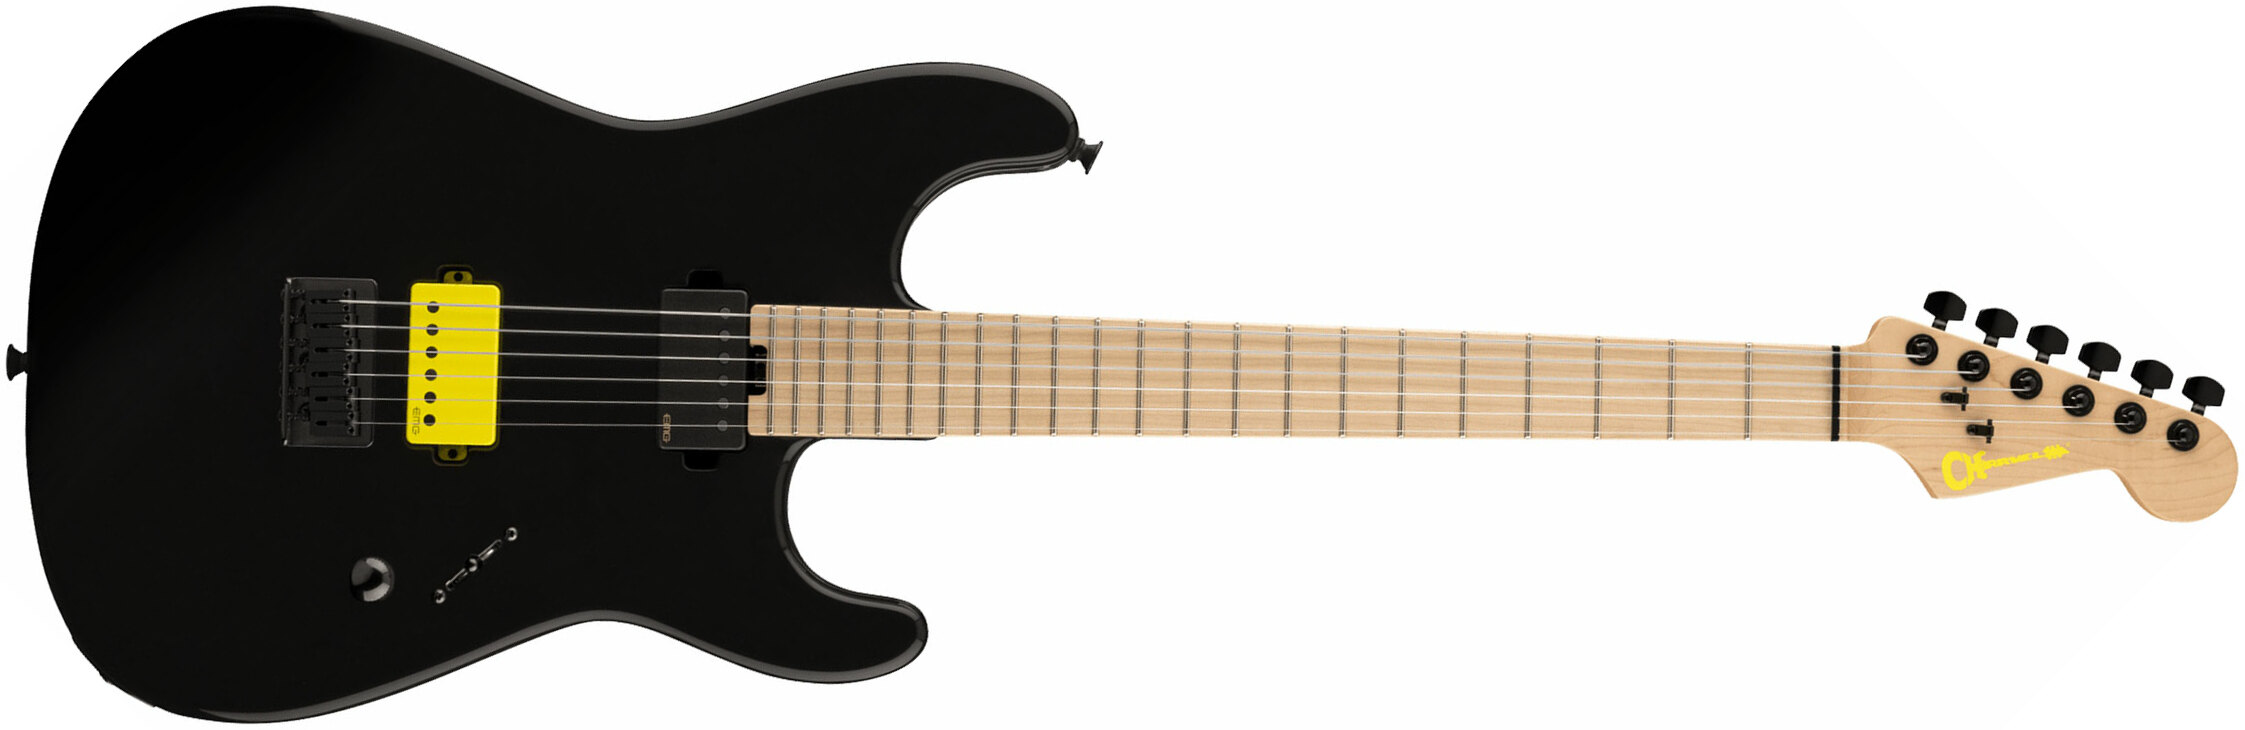 Charvel Sean Long San Dimas Style 1 Pro-mod Signature 2h Emg Ht Mn - Gloss Black - E-Gitarre in Str-Form - Main picture